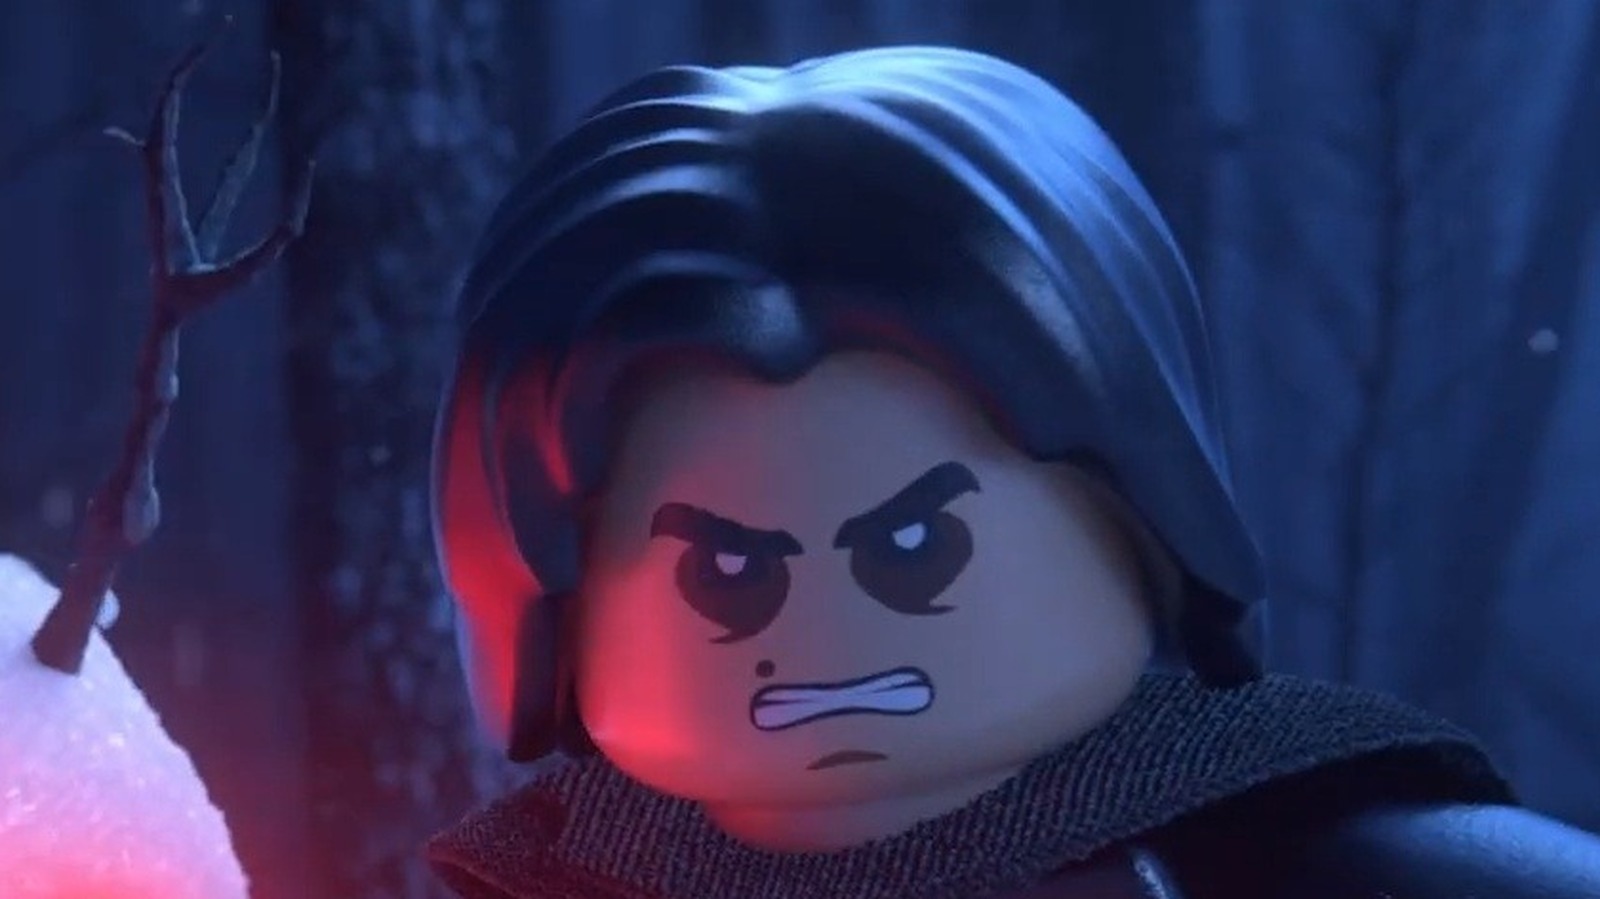 Lego Star Wars: The Skywalker Saga developers say crunch was a